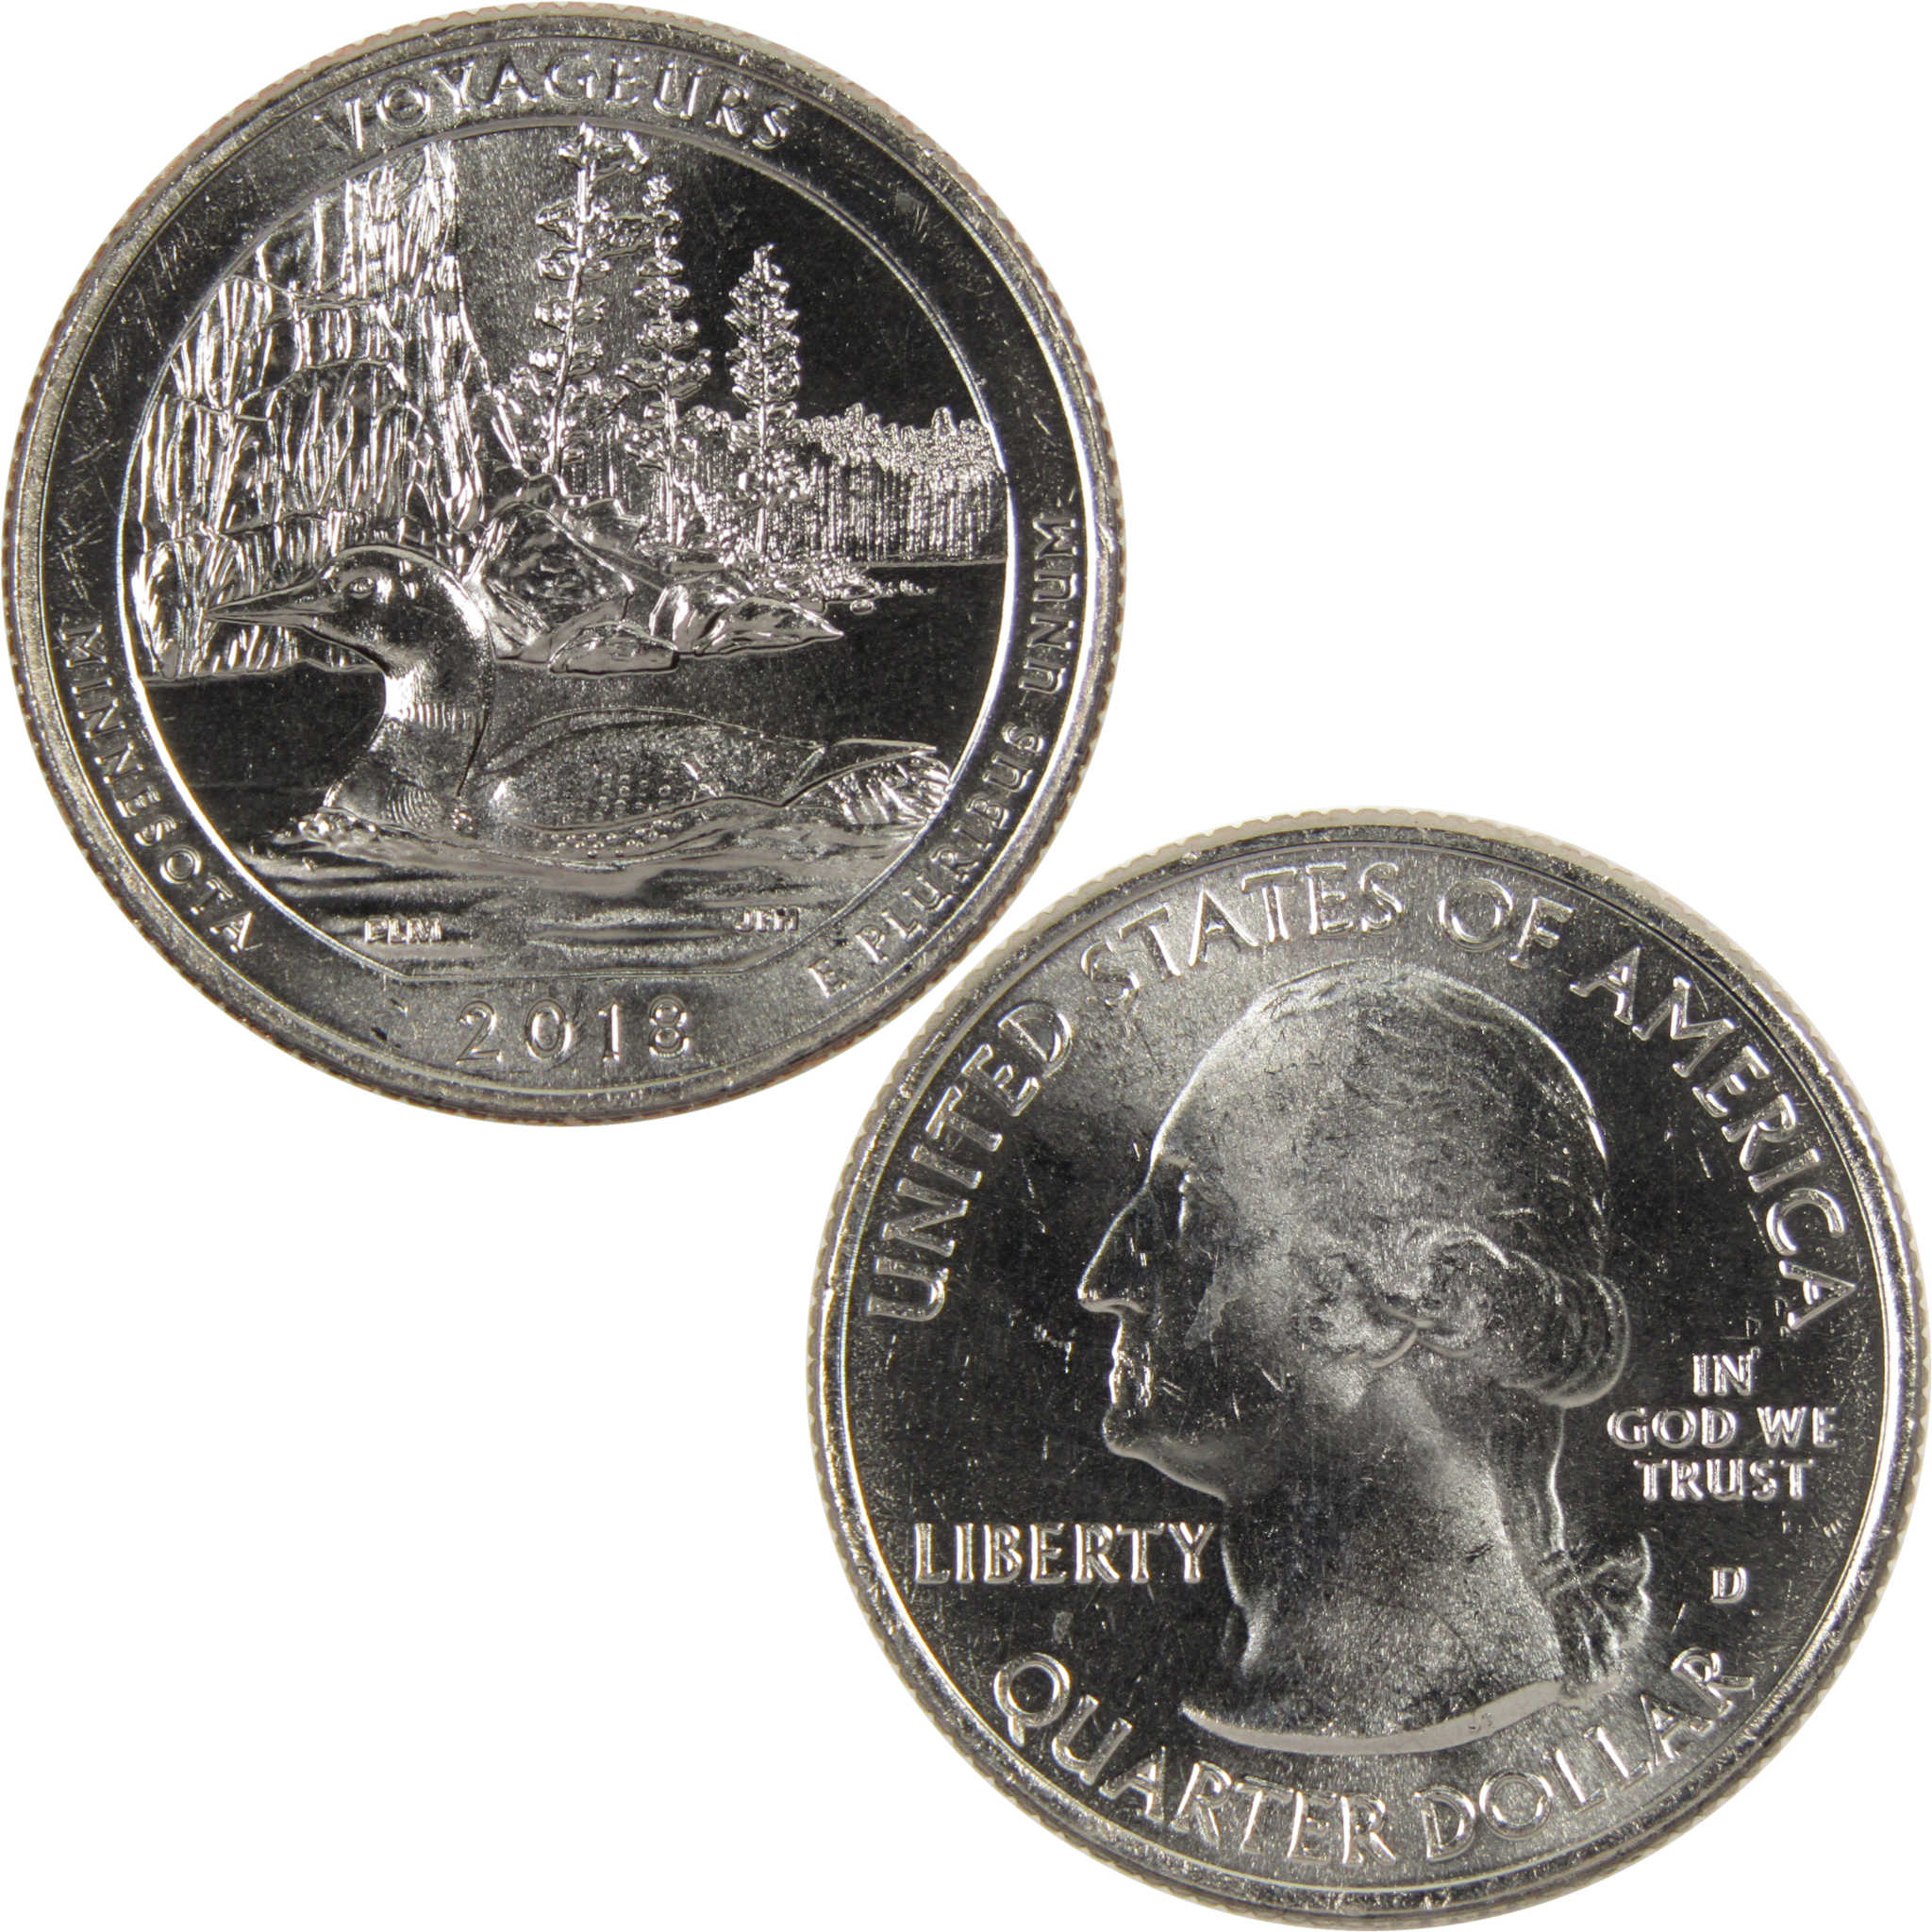 2018 D Voyageurs NP National Park Quarter BU Uncirculated Clad Coin